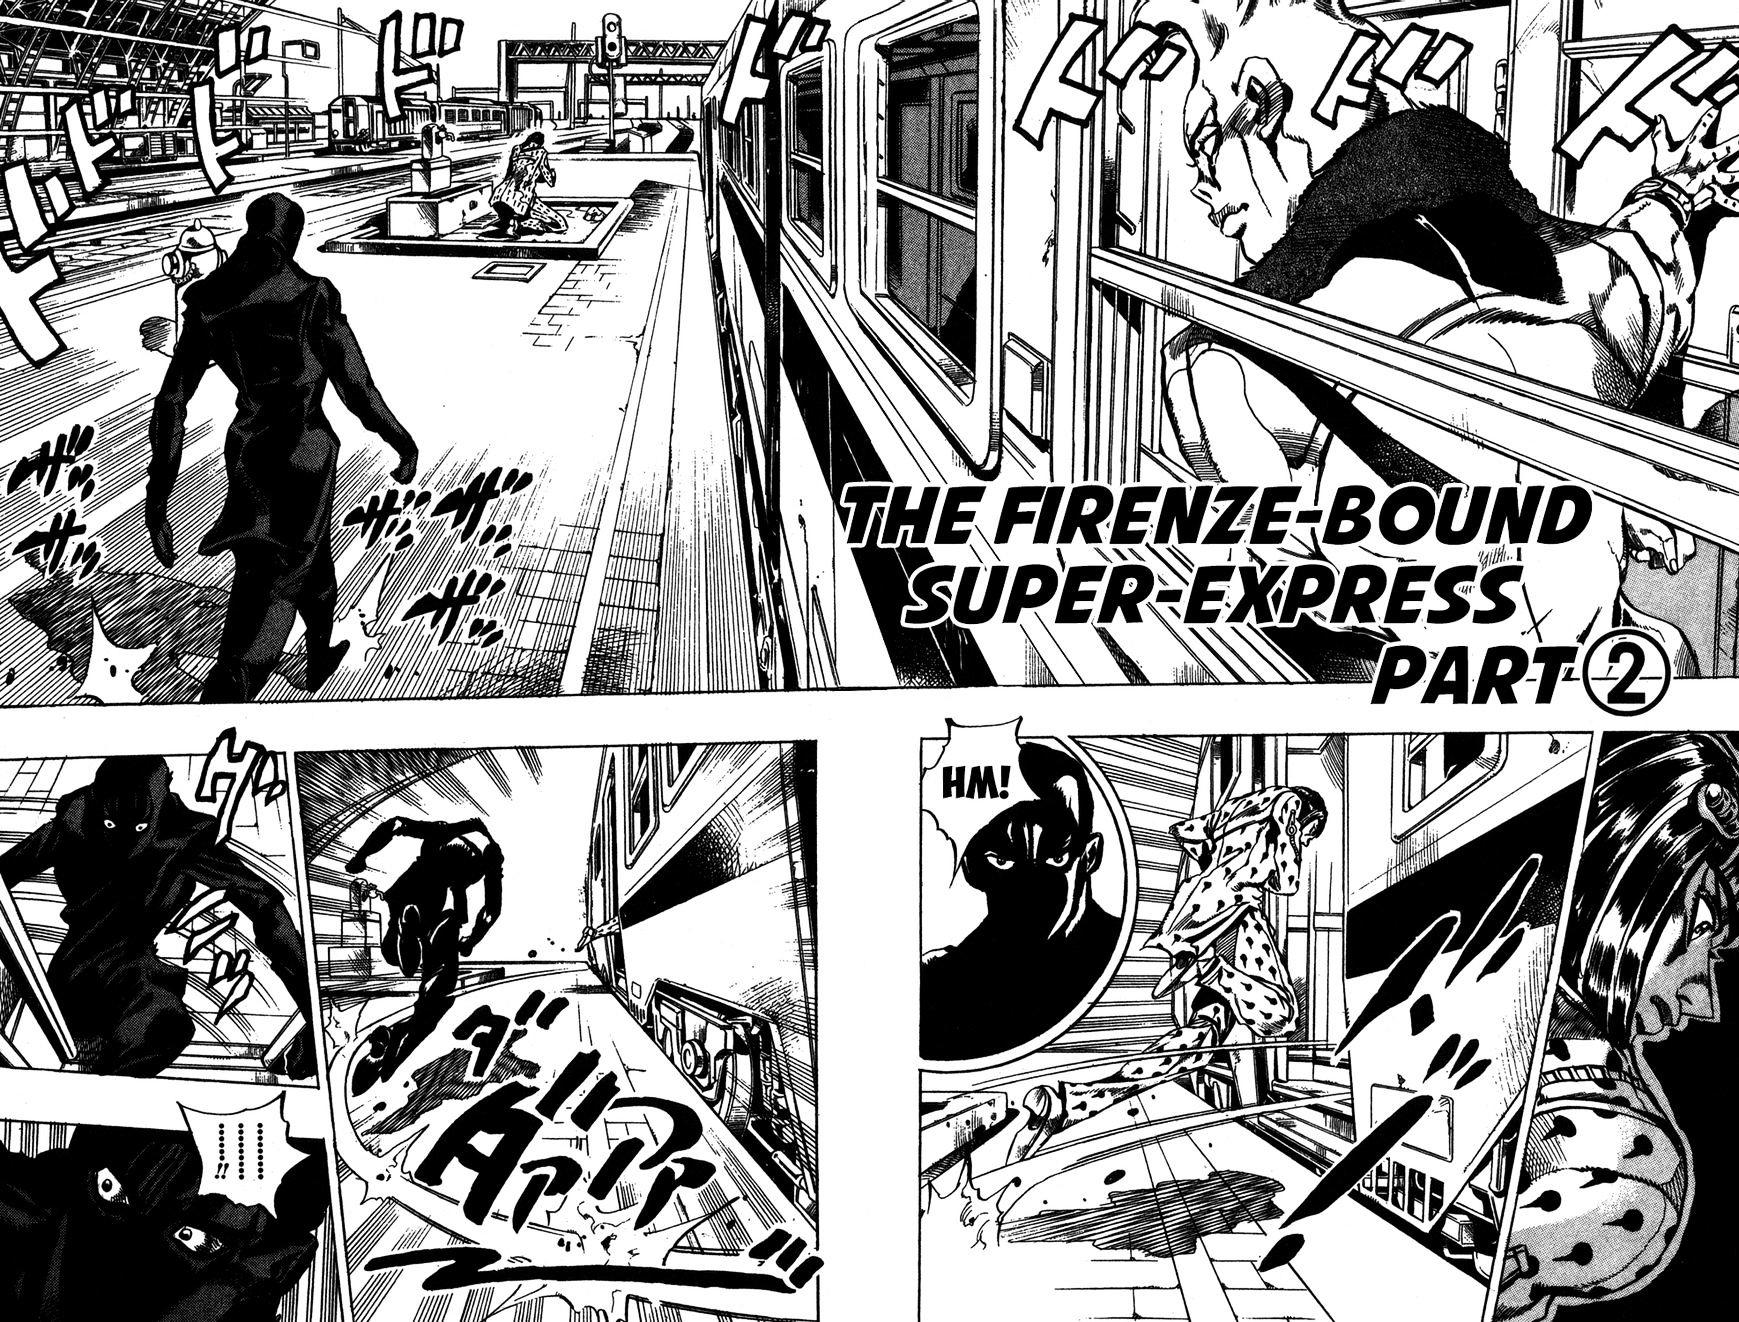 Jojo's Bizarre Adventure Vol.52 Chapter 487 : The Firenze-Bound Super Express - Part 2 page 3 - 